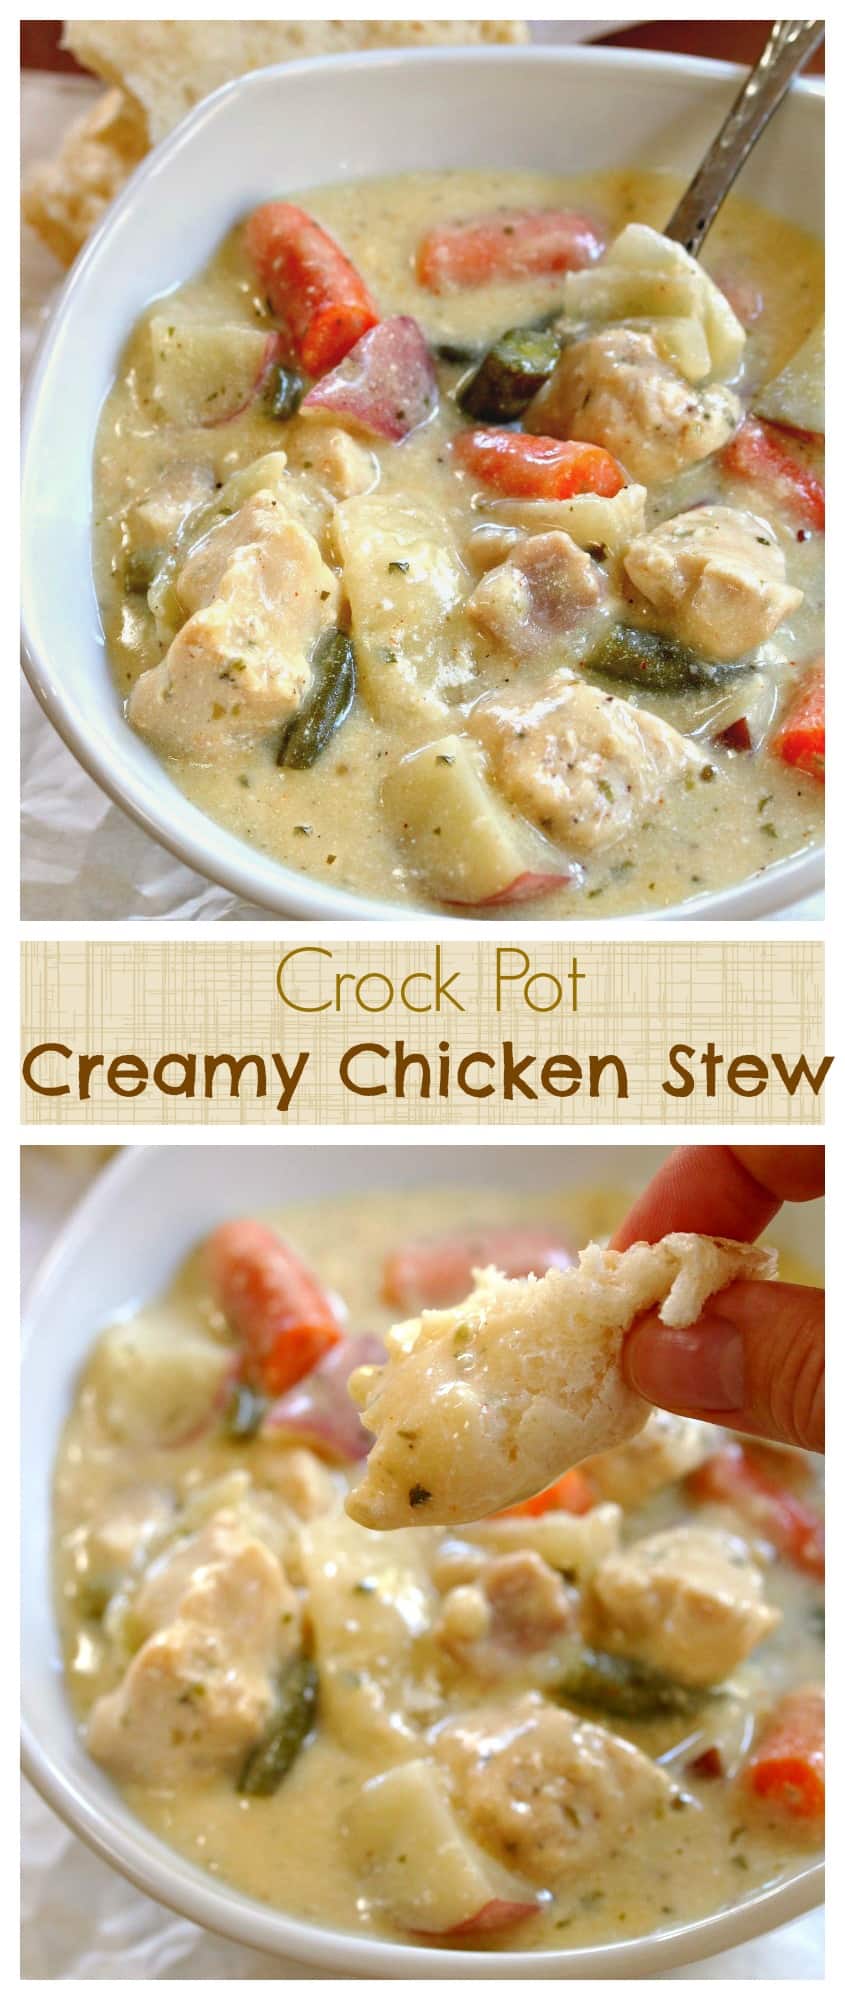 Crock Pot Creamy Chicken Stew - The Cozy Cook